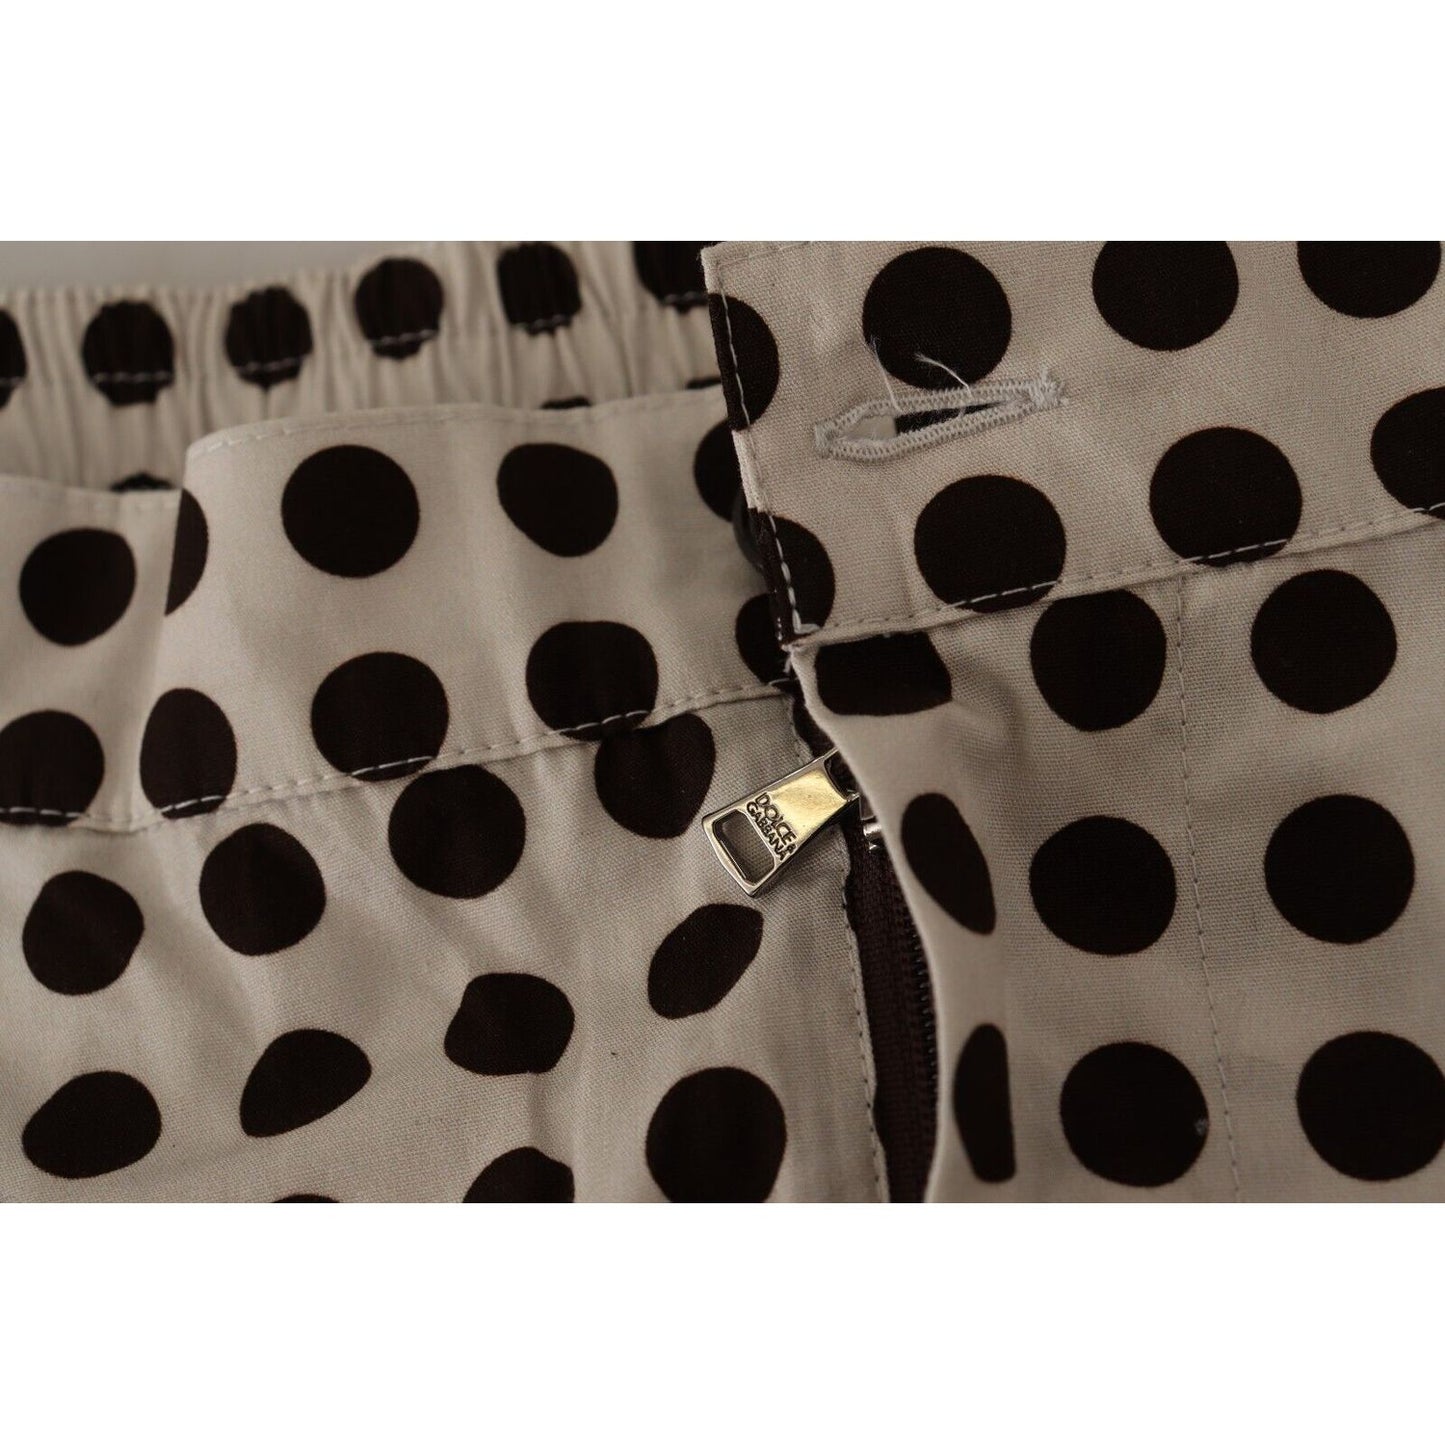 Dolce & Gabbana Elegant Polka Dot Cotton Shorts black-white-polka-dots-cotton-linen-shorts s-l1600-2-20-39c1d2b4-9d5.jpg